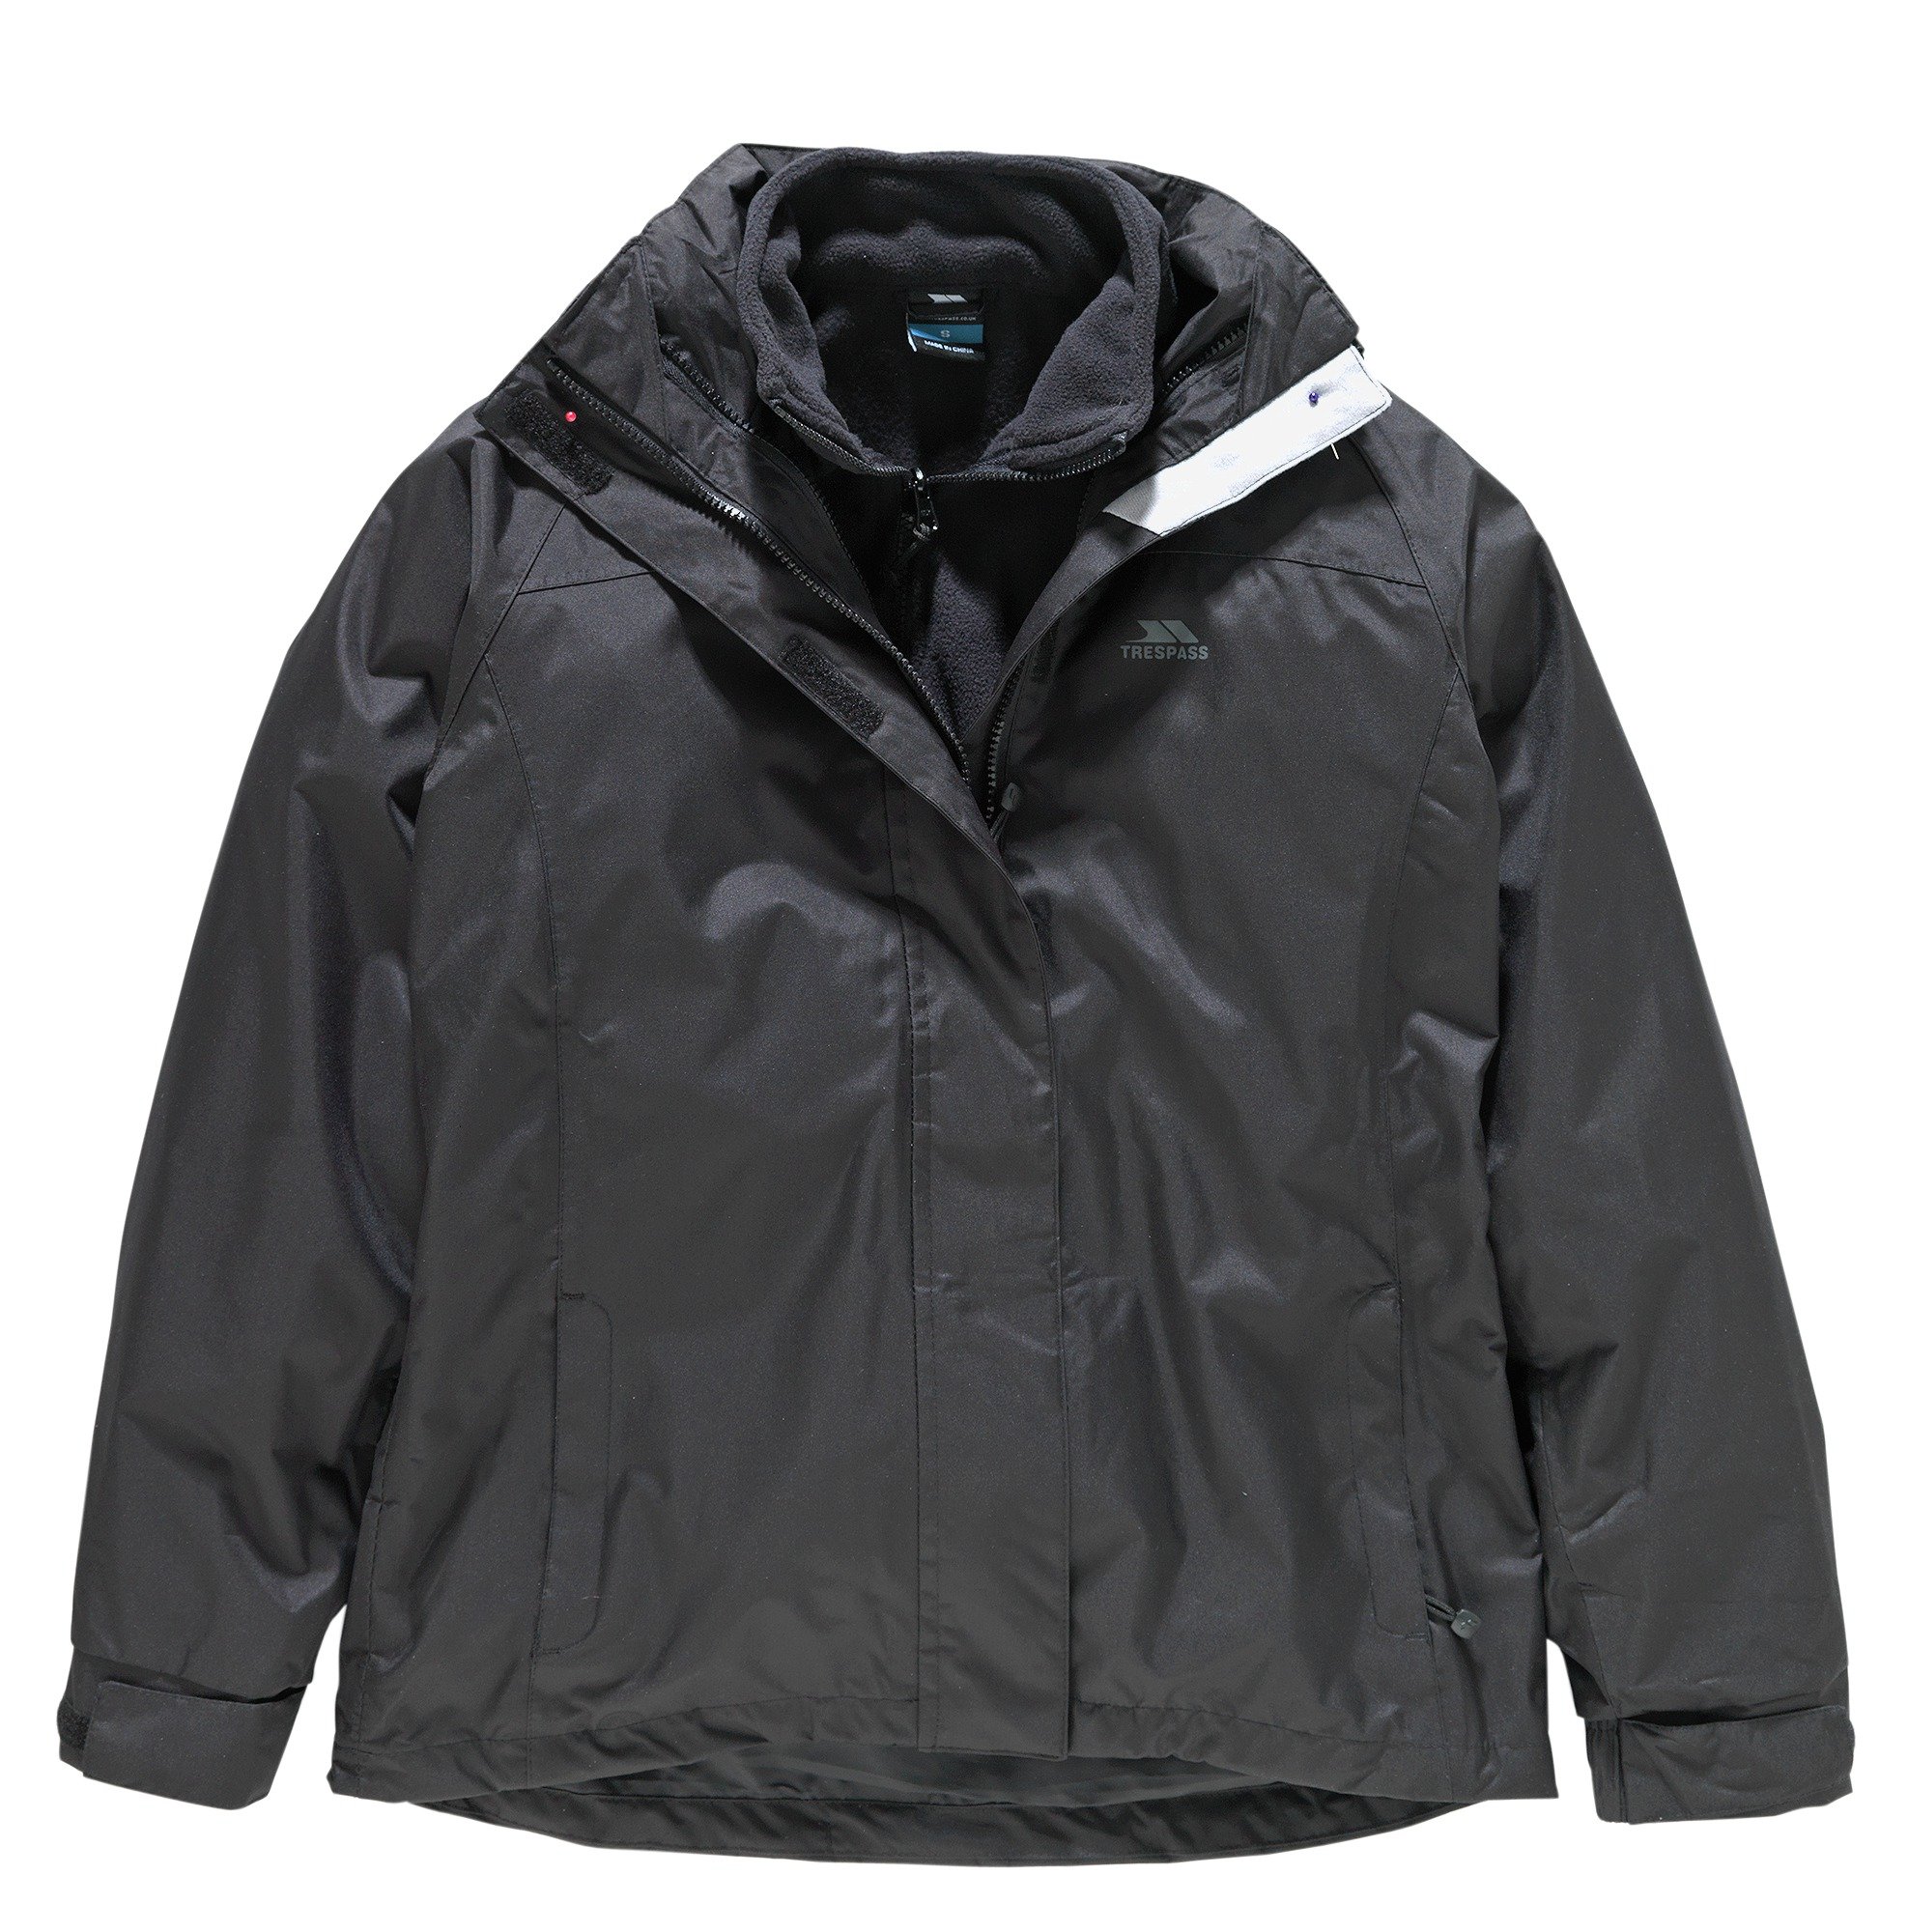 Trespass Black 3-in-1 Jacket & Fleece - Medium